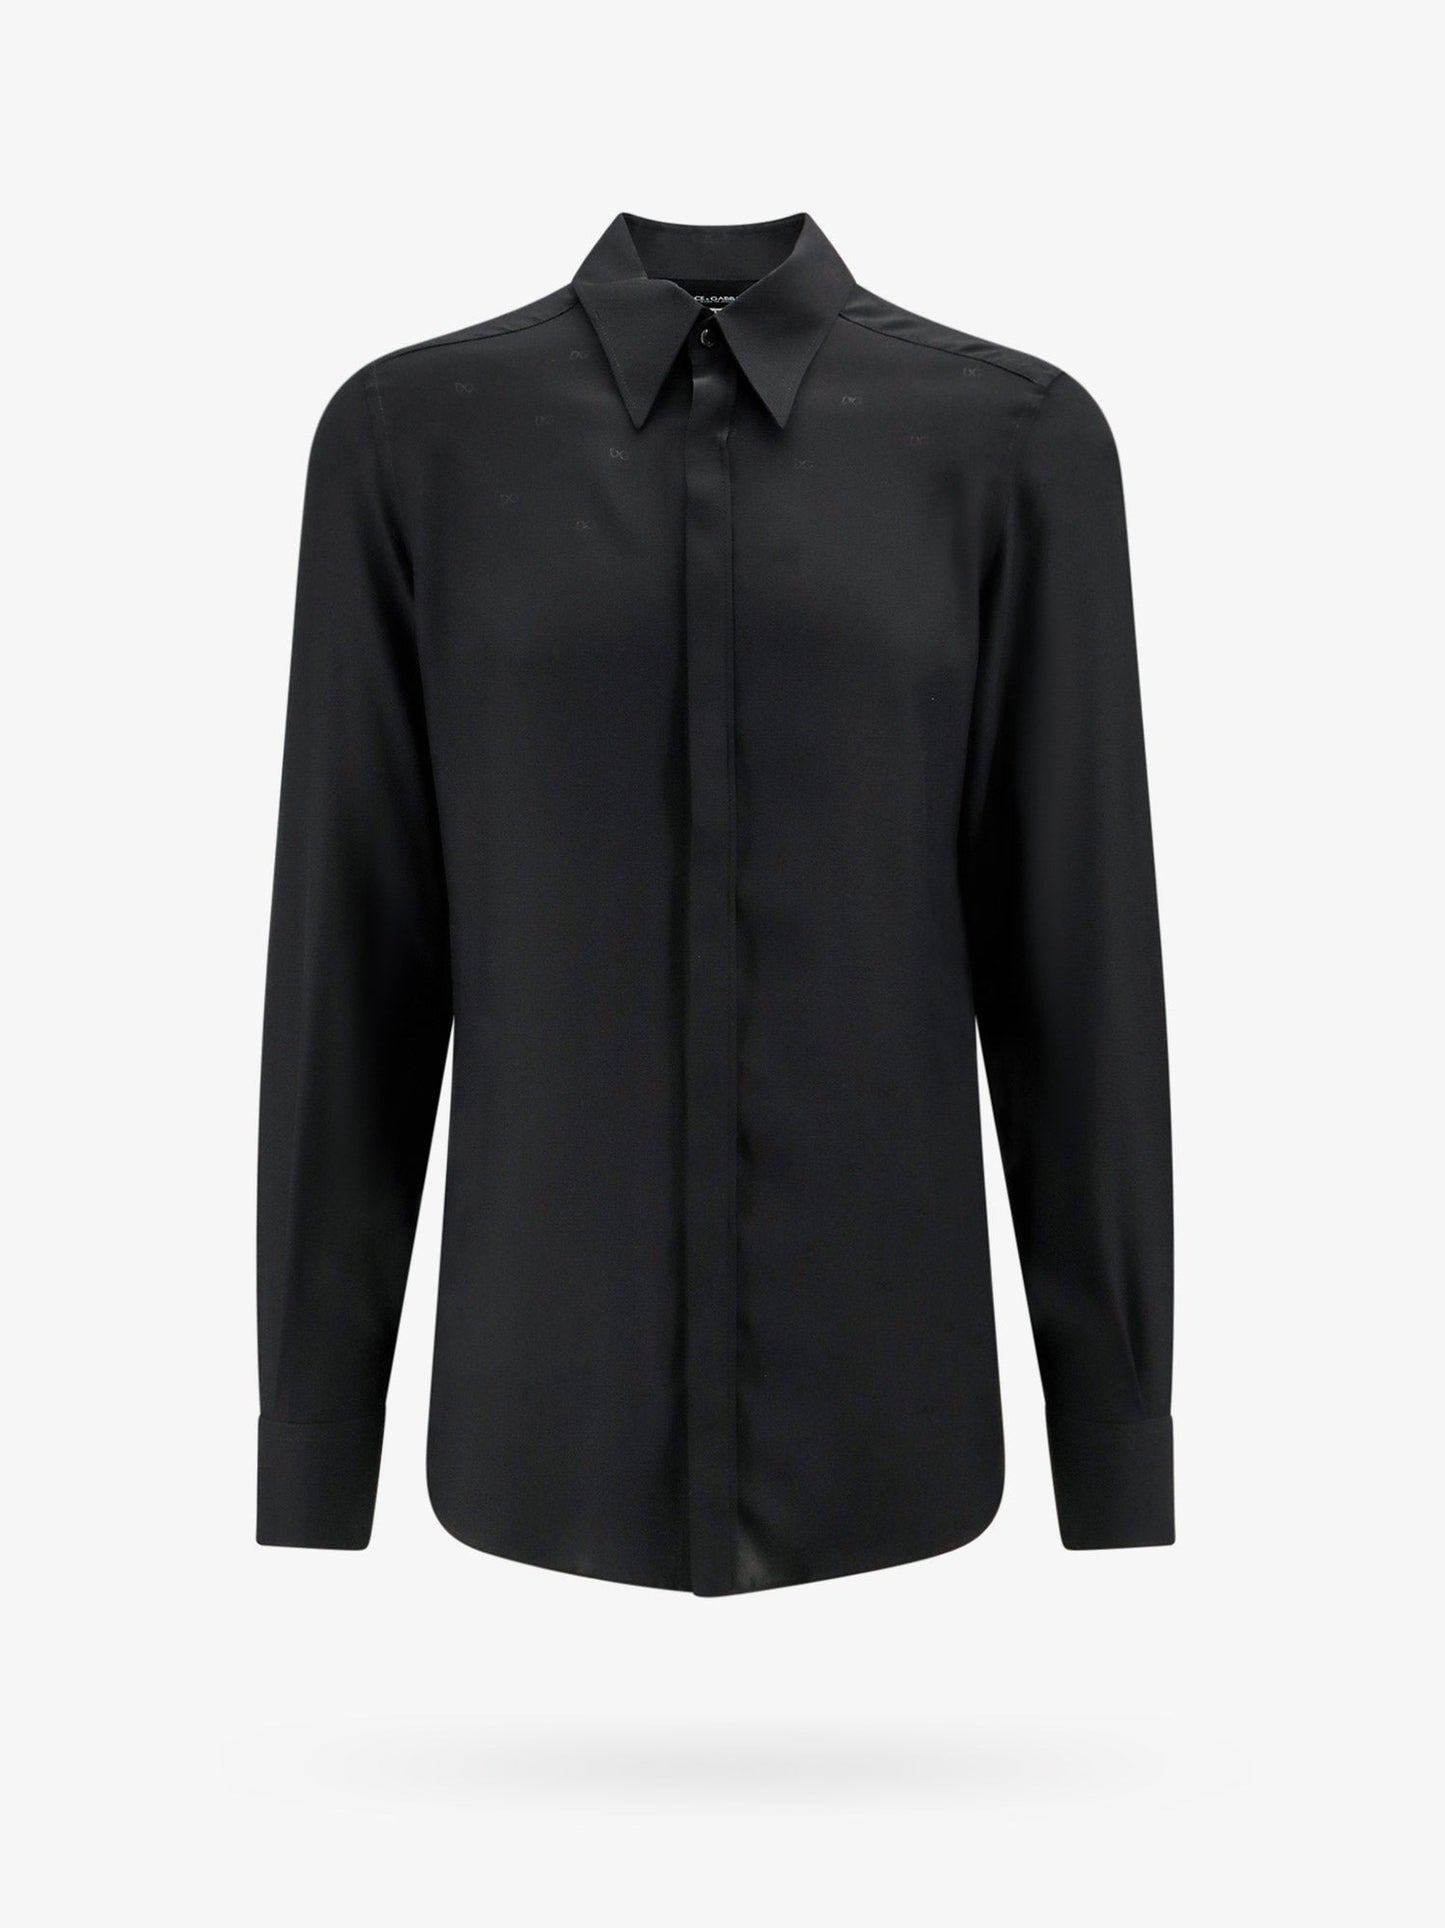 Dolce & Gabbana Man Shirt Man Black Shirts